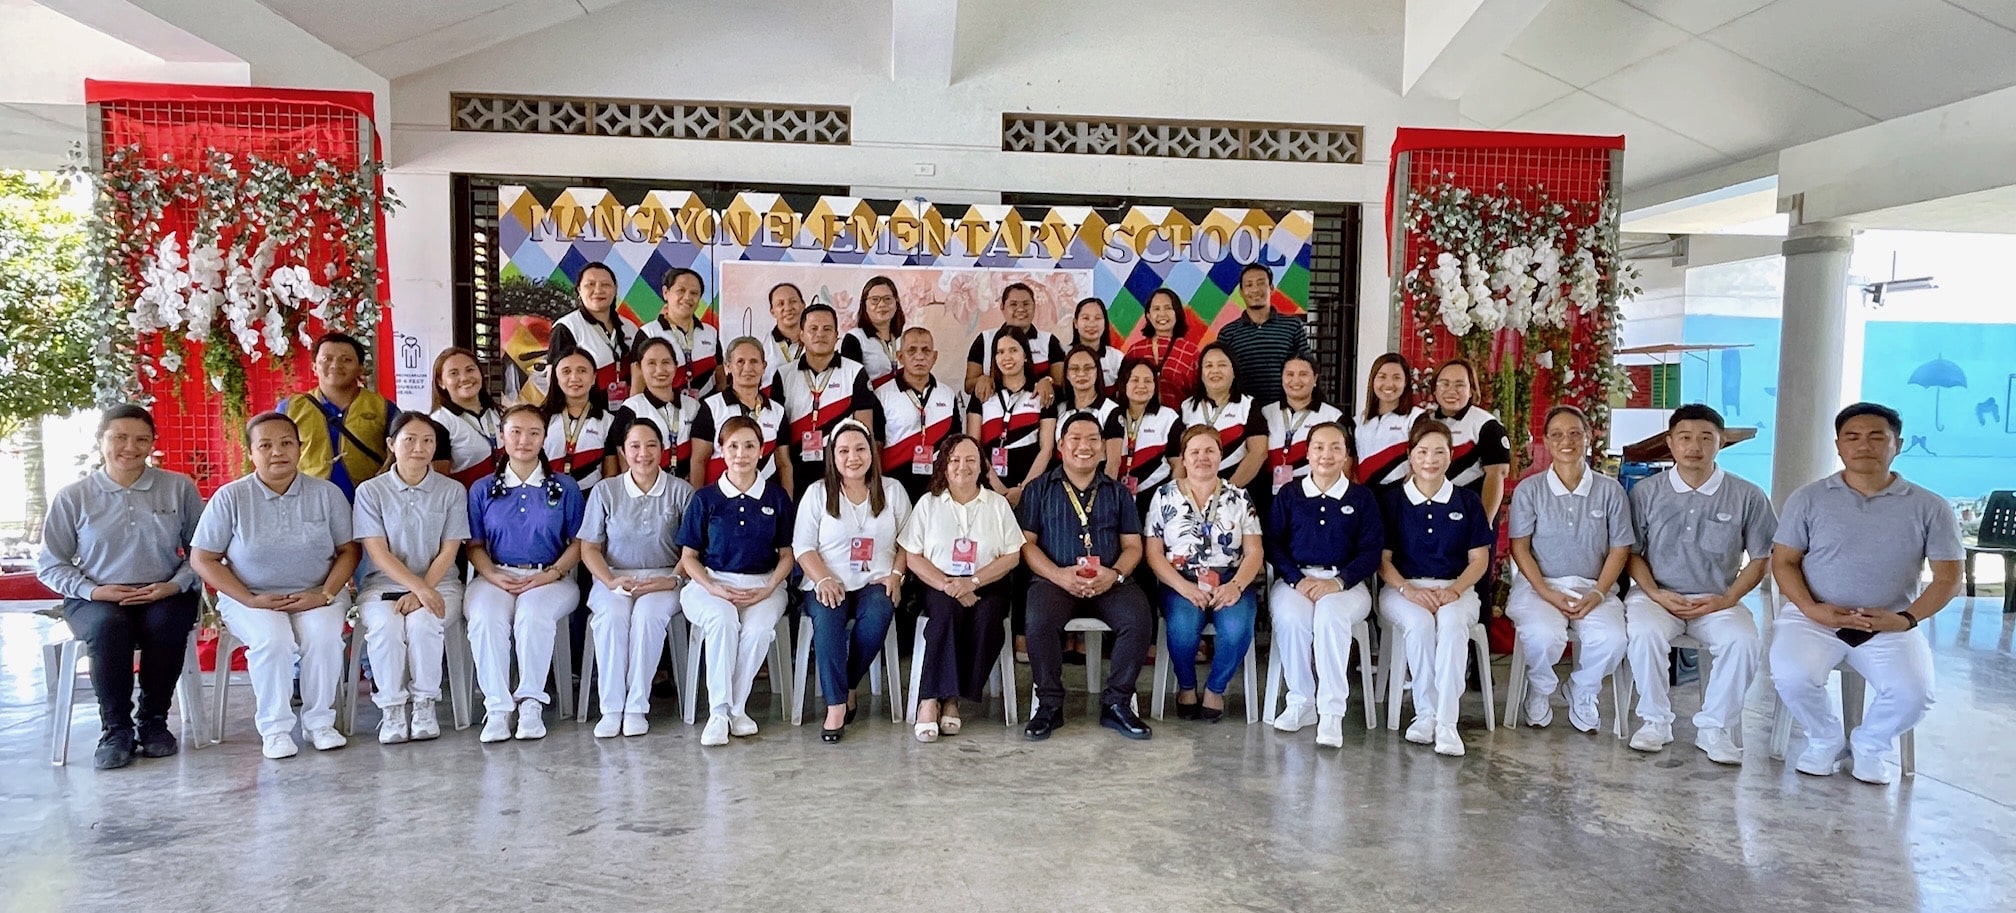 Mangayon Elementary School Principal 2 Sandy G. Yee (seated center, in dark shirt) joins faculty members and Tzu Chi volunteers in a group shot. (Photo from Mangayon Elementary School’s Facebook Page)